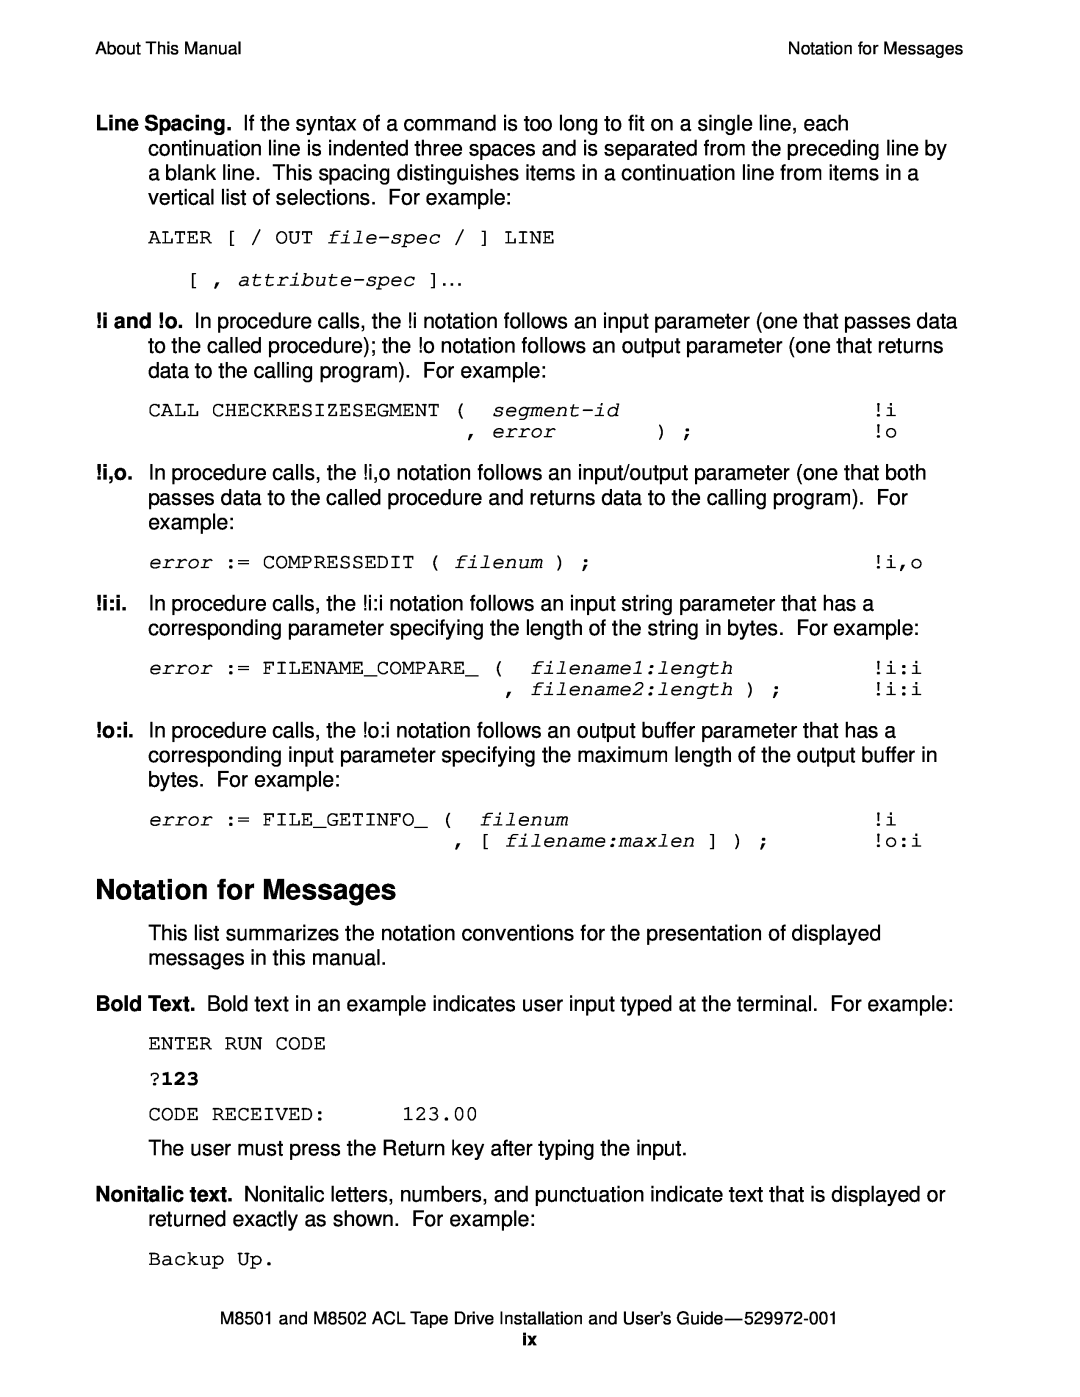 SMC Networks M8501 manual Notation for Messages, attribute-spec …, error = COMPRESSEDIT filenum, filename2length, ?123 